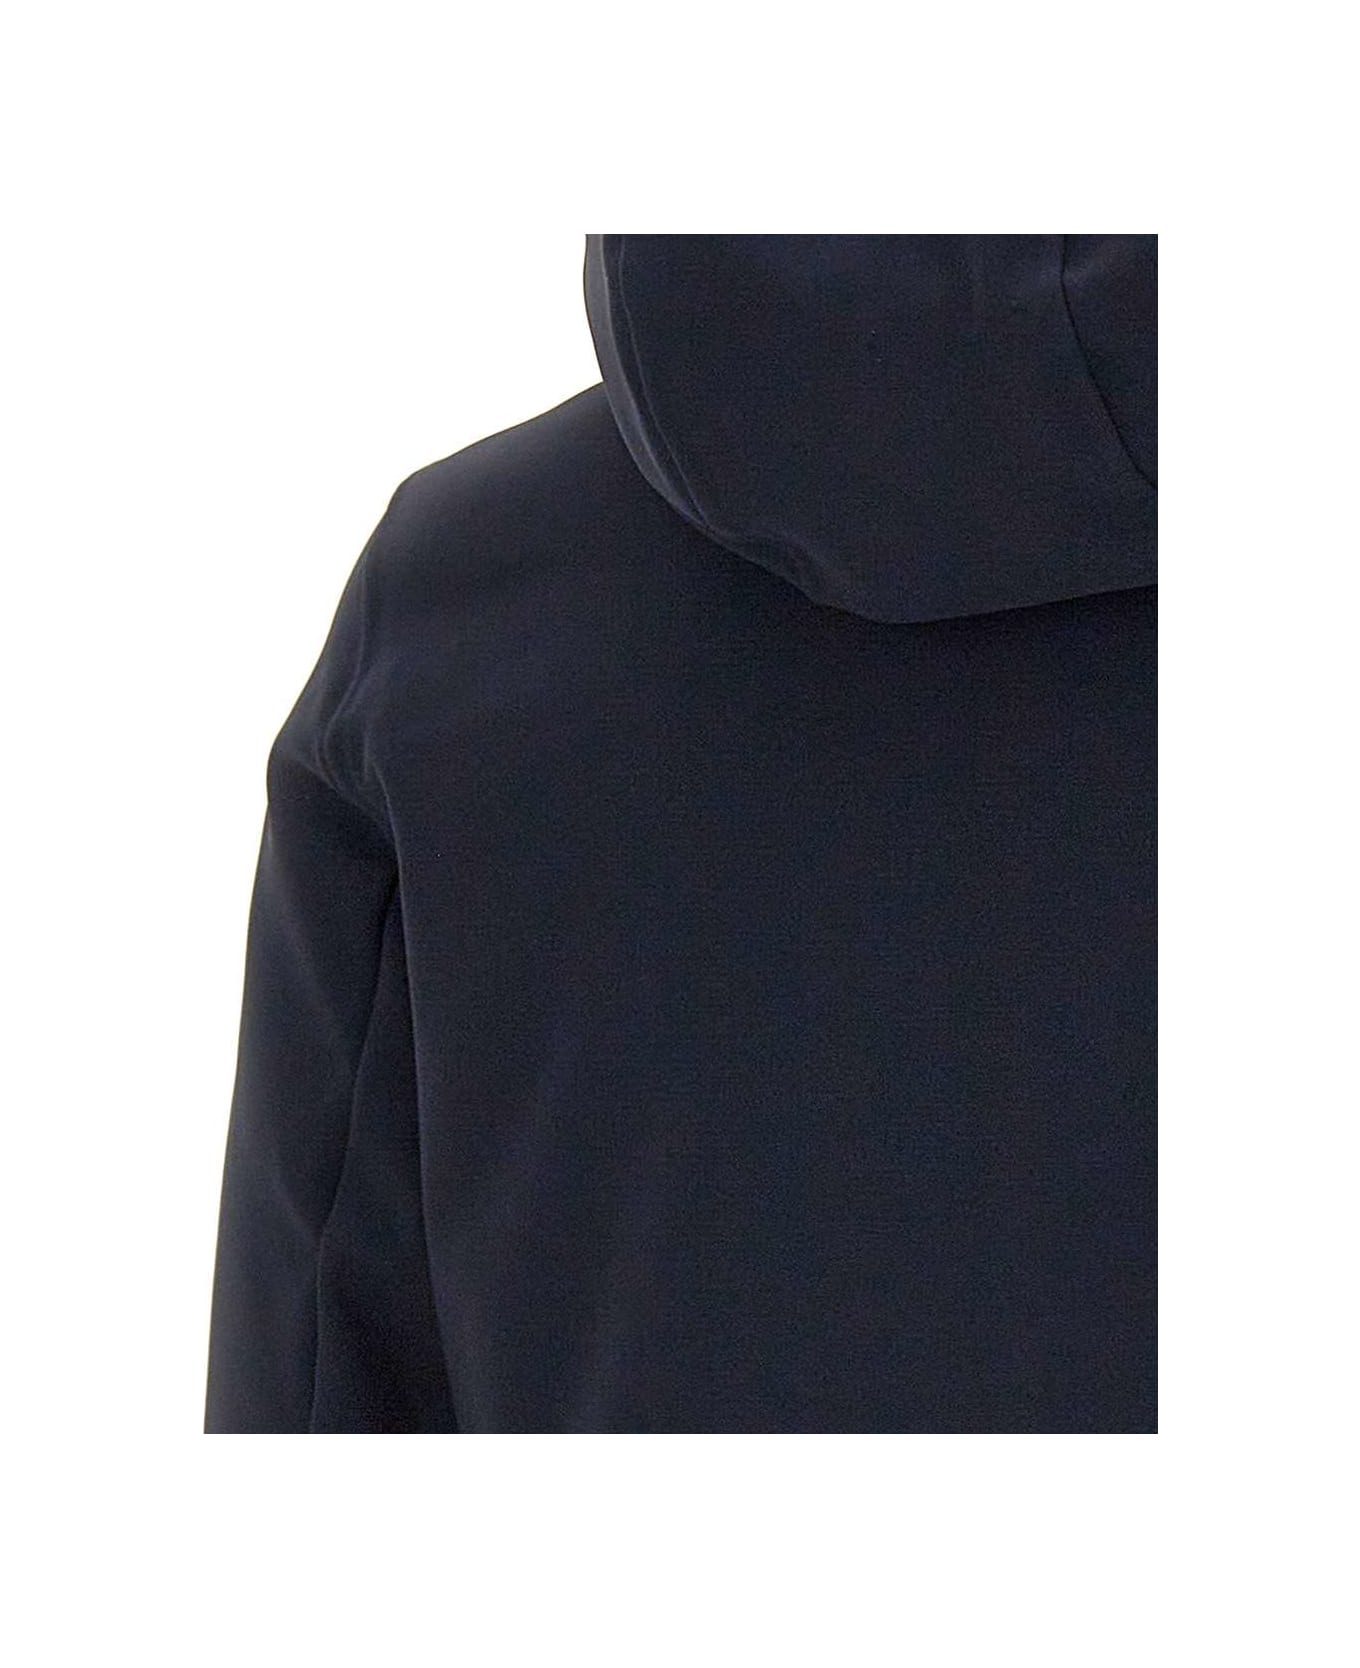 RRD - Roberto Ricci Design 'winter Storm' Jacket - Blue Black ショートパンツ